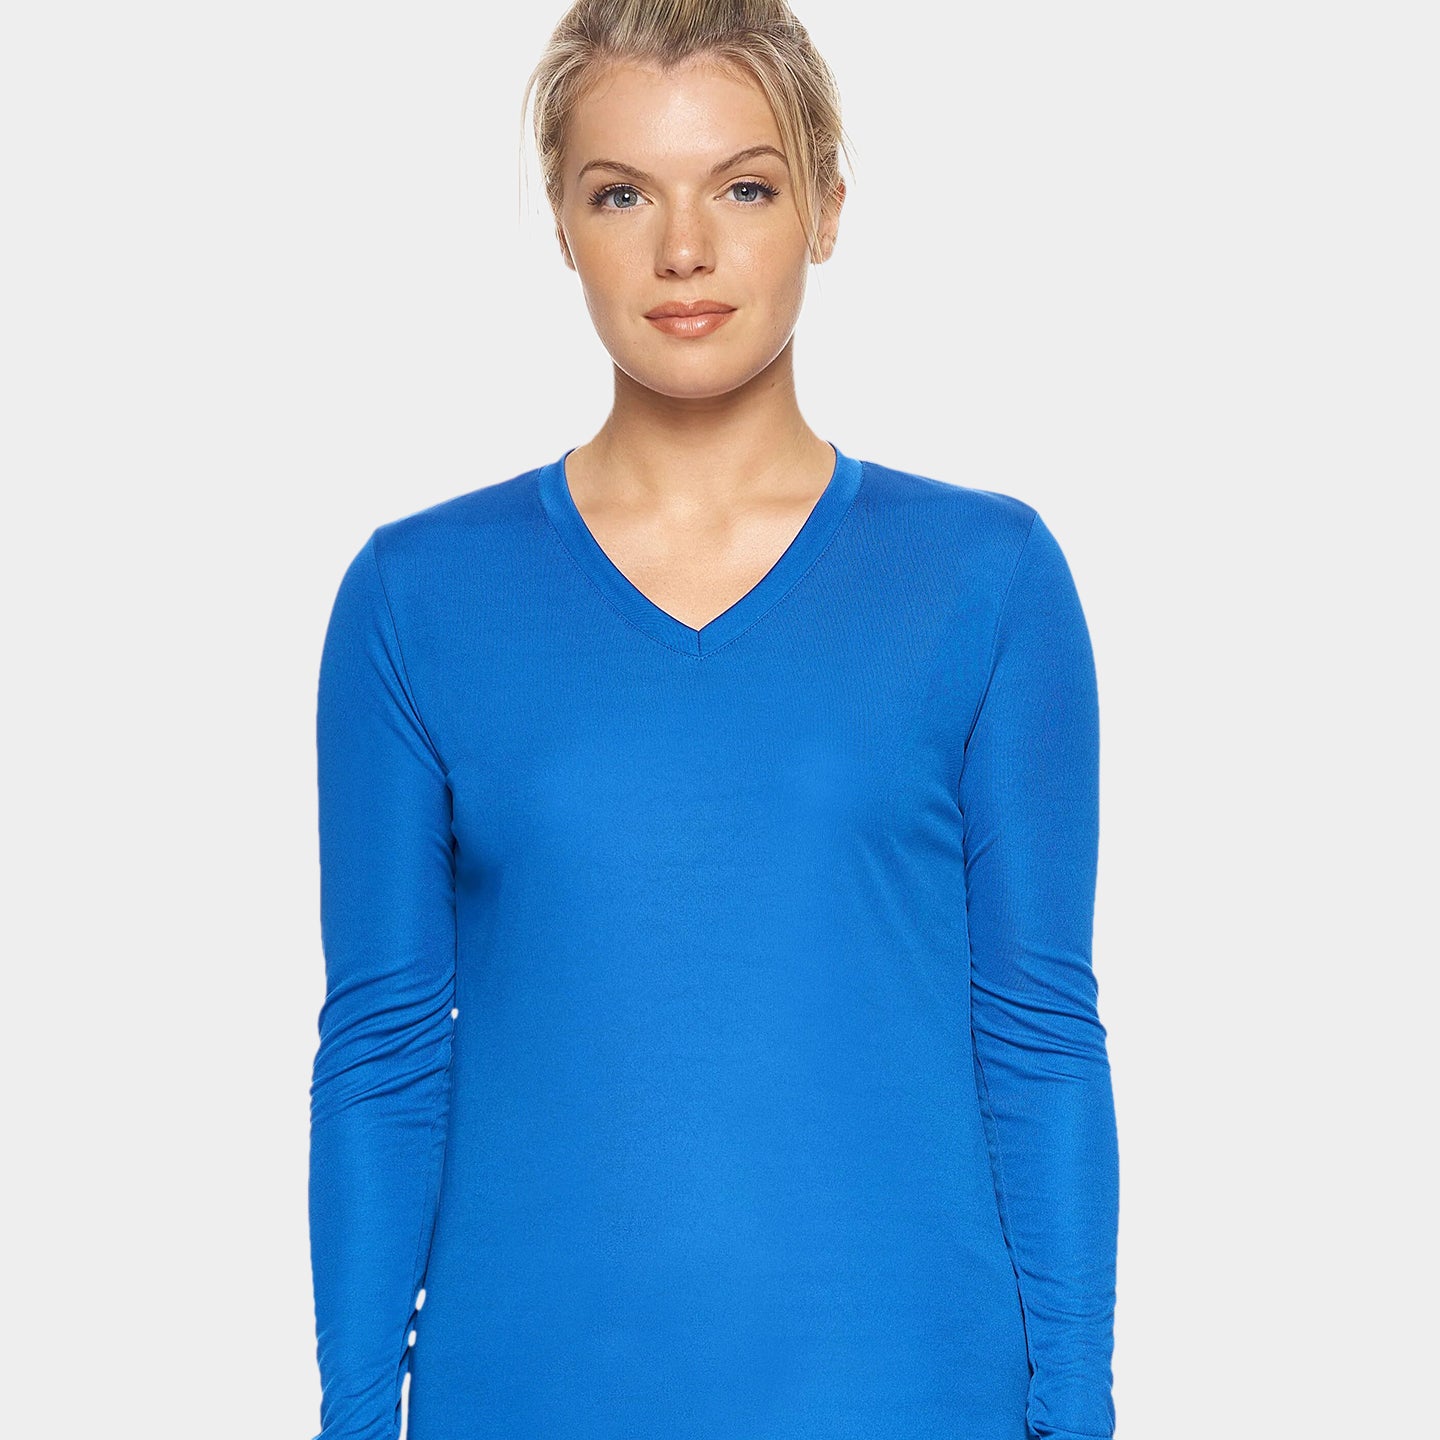 Expert Brand DriMax Women's Performance V-Neck Long Sleeve Shirt, XL, Royal Blue A1